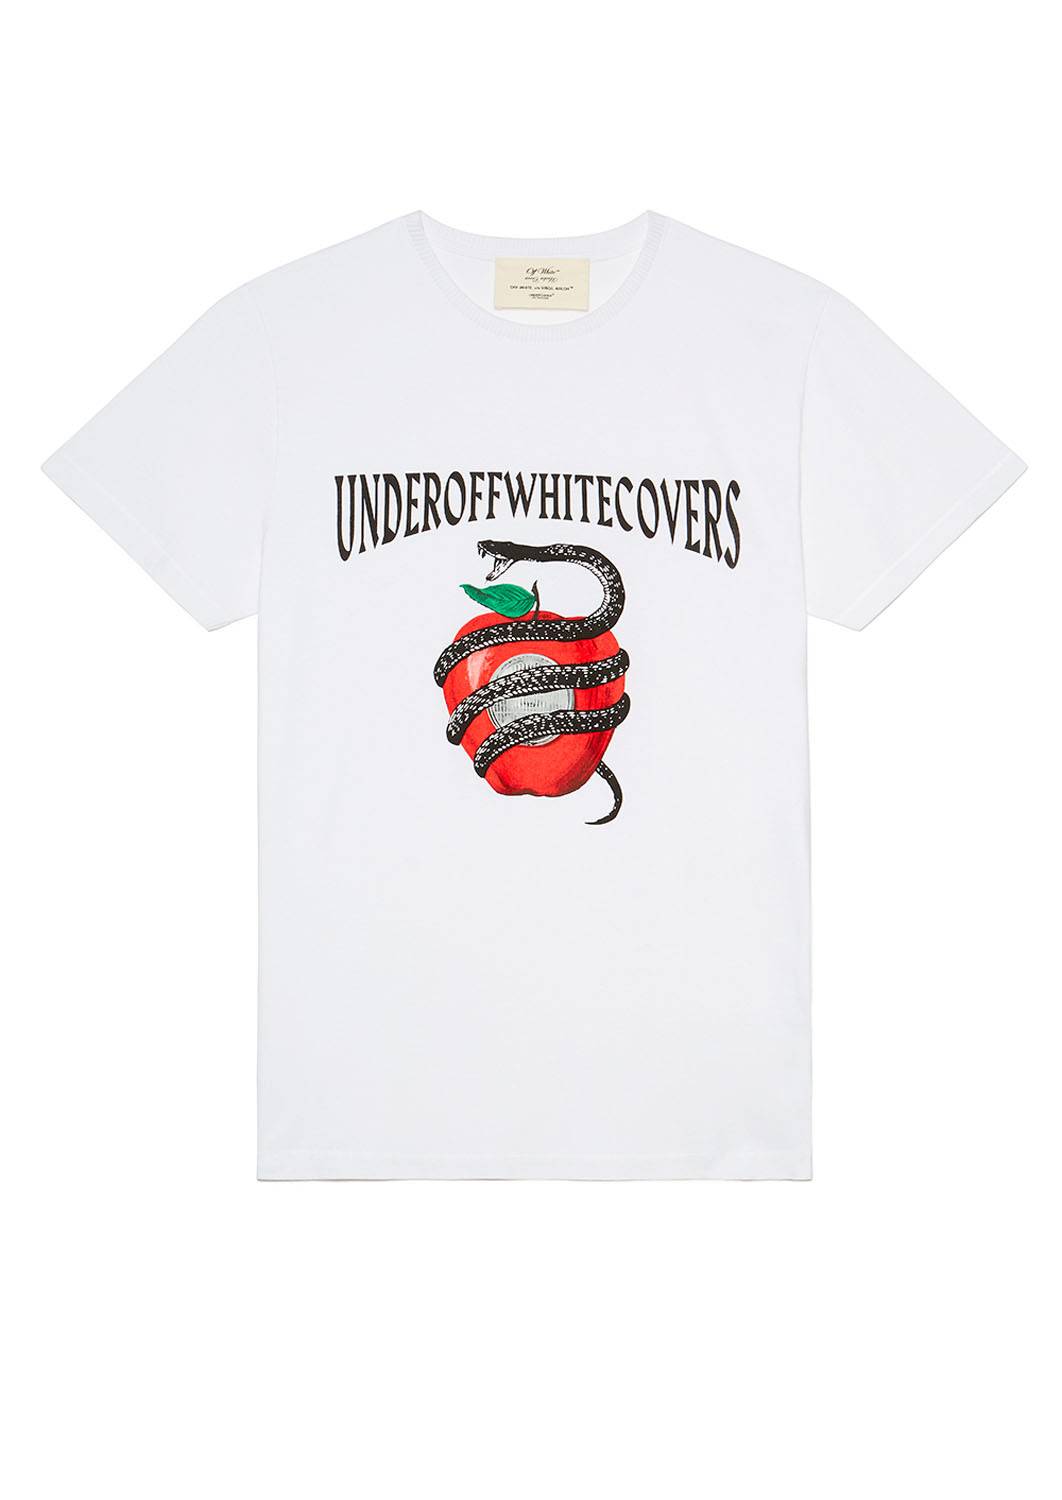 Off-White collabore avec Undercover pour une collection streetwear